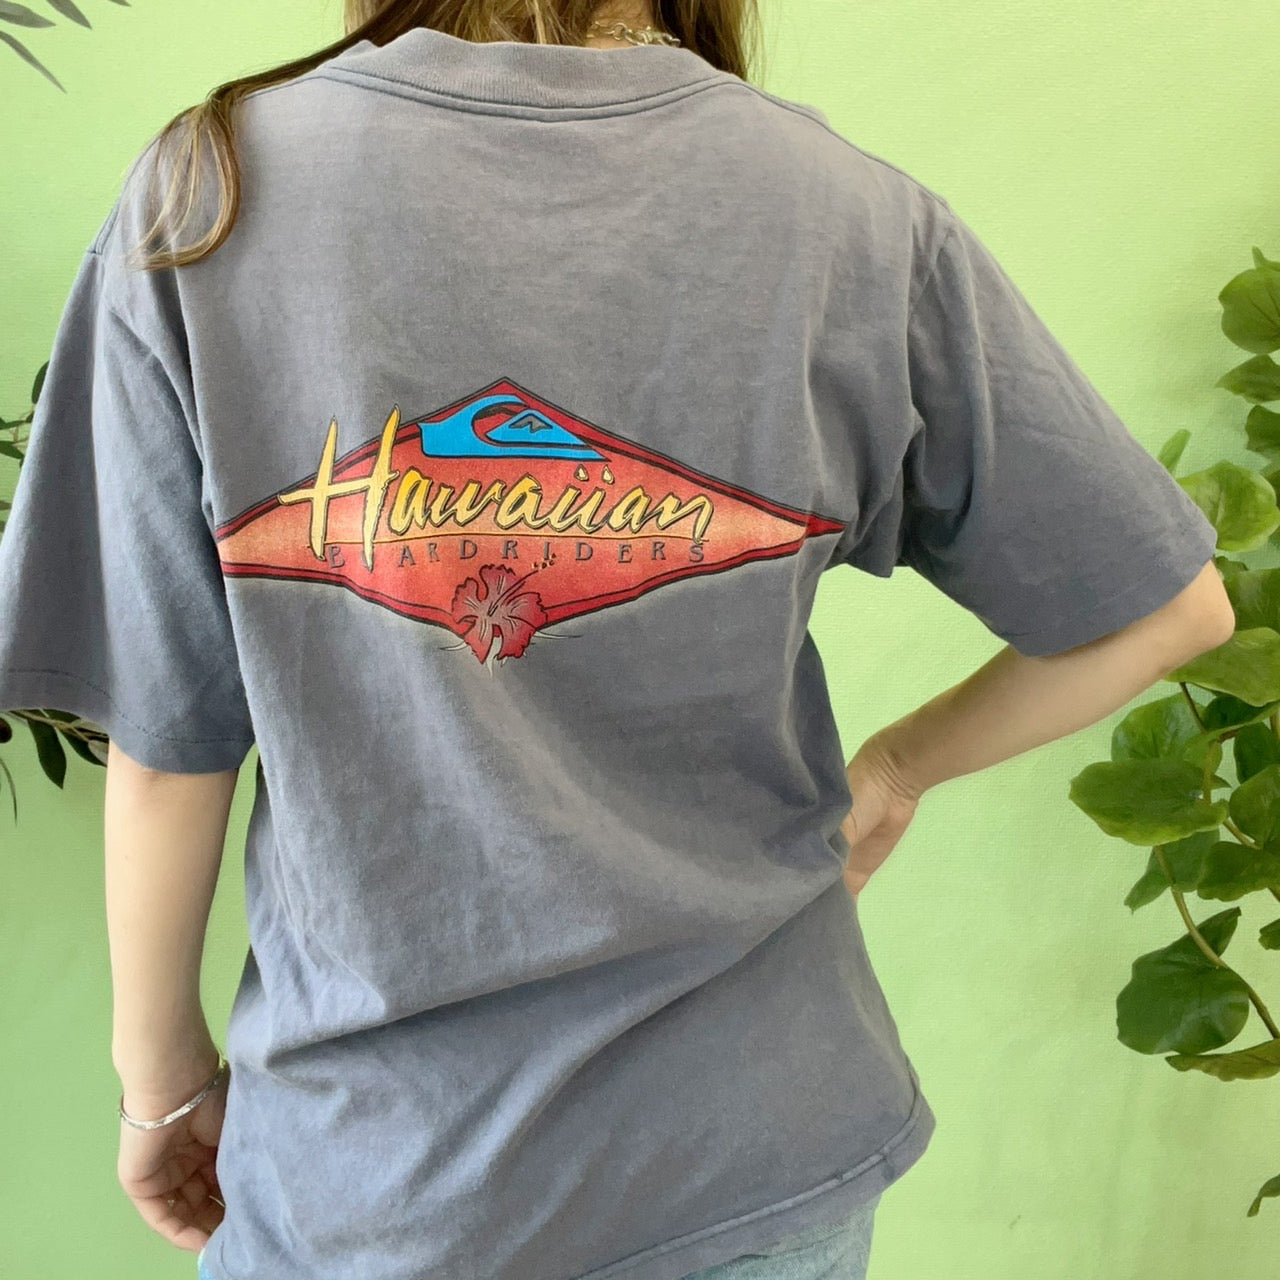 【Quiksilver】90's vintage Quiksilver Hawaiian t-shirt made in USA (men's S )